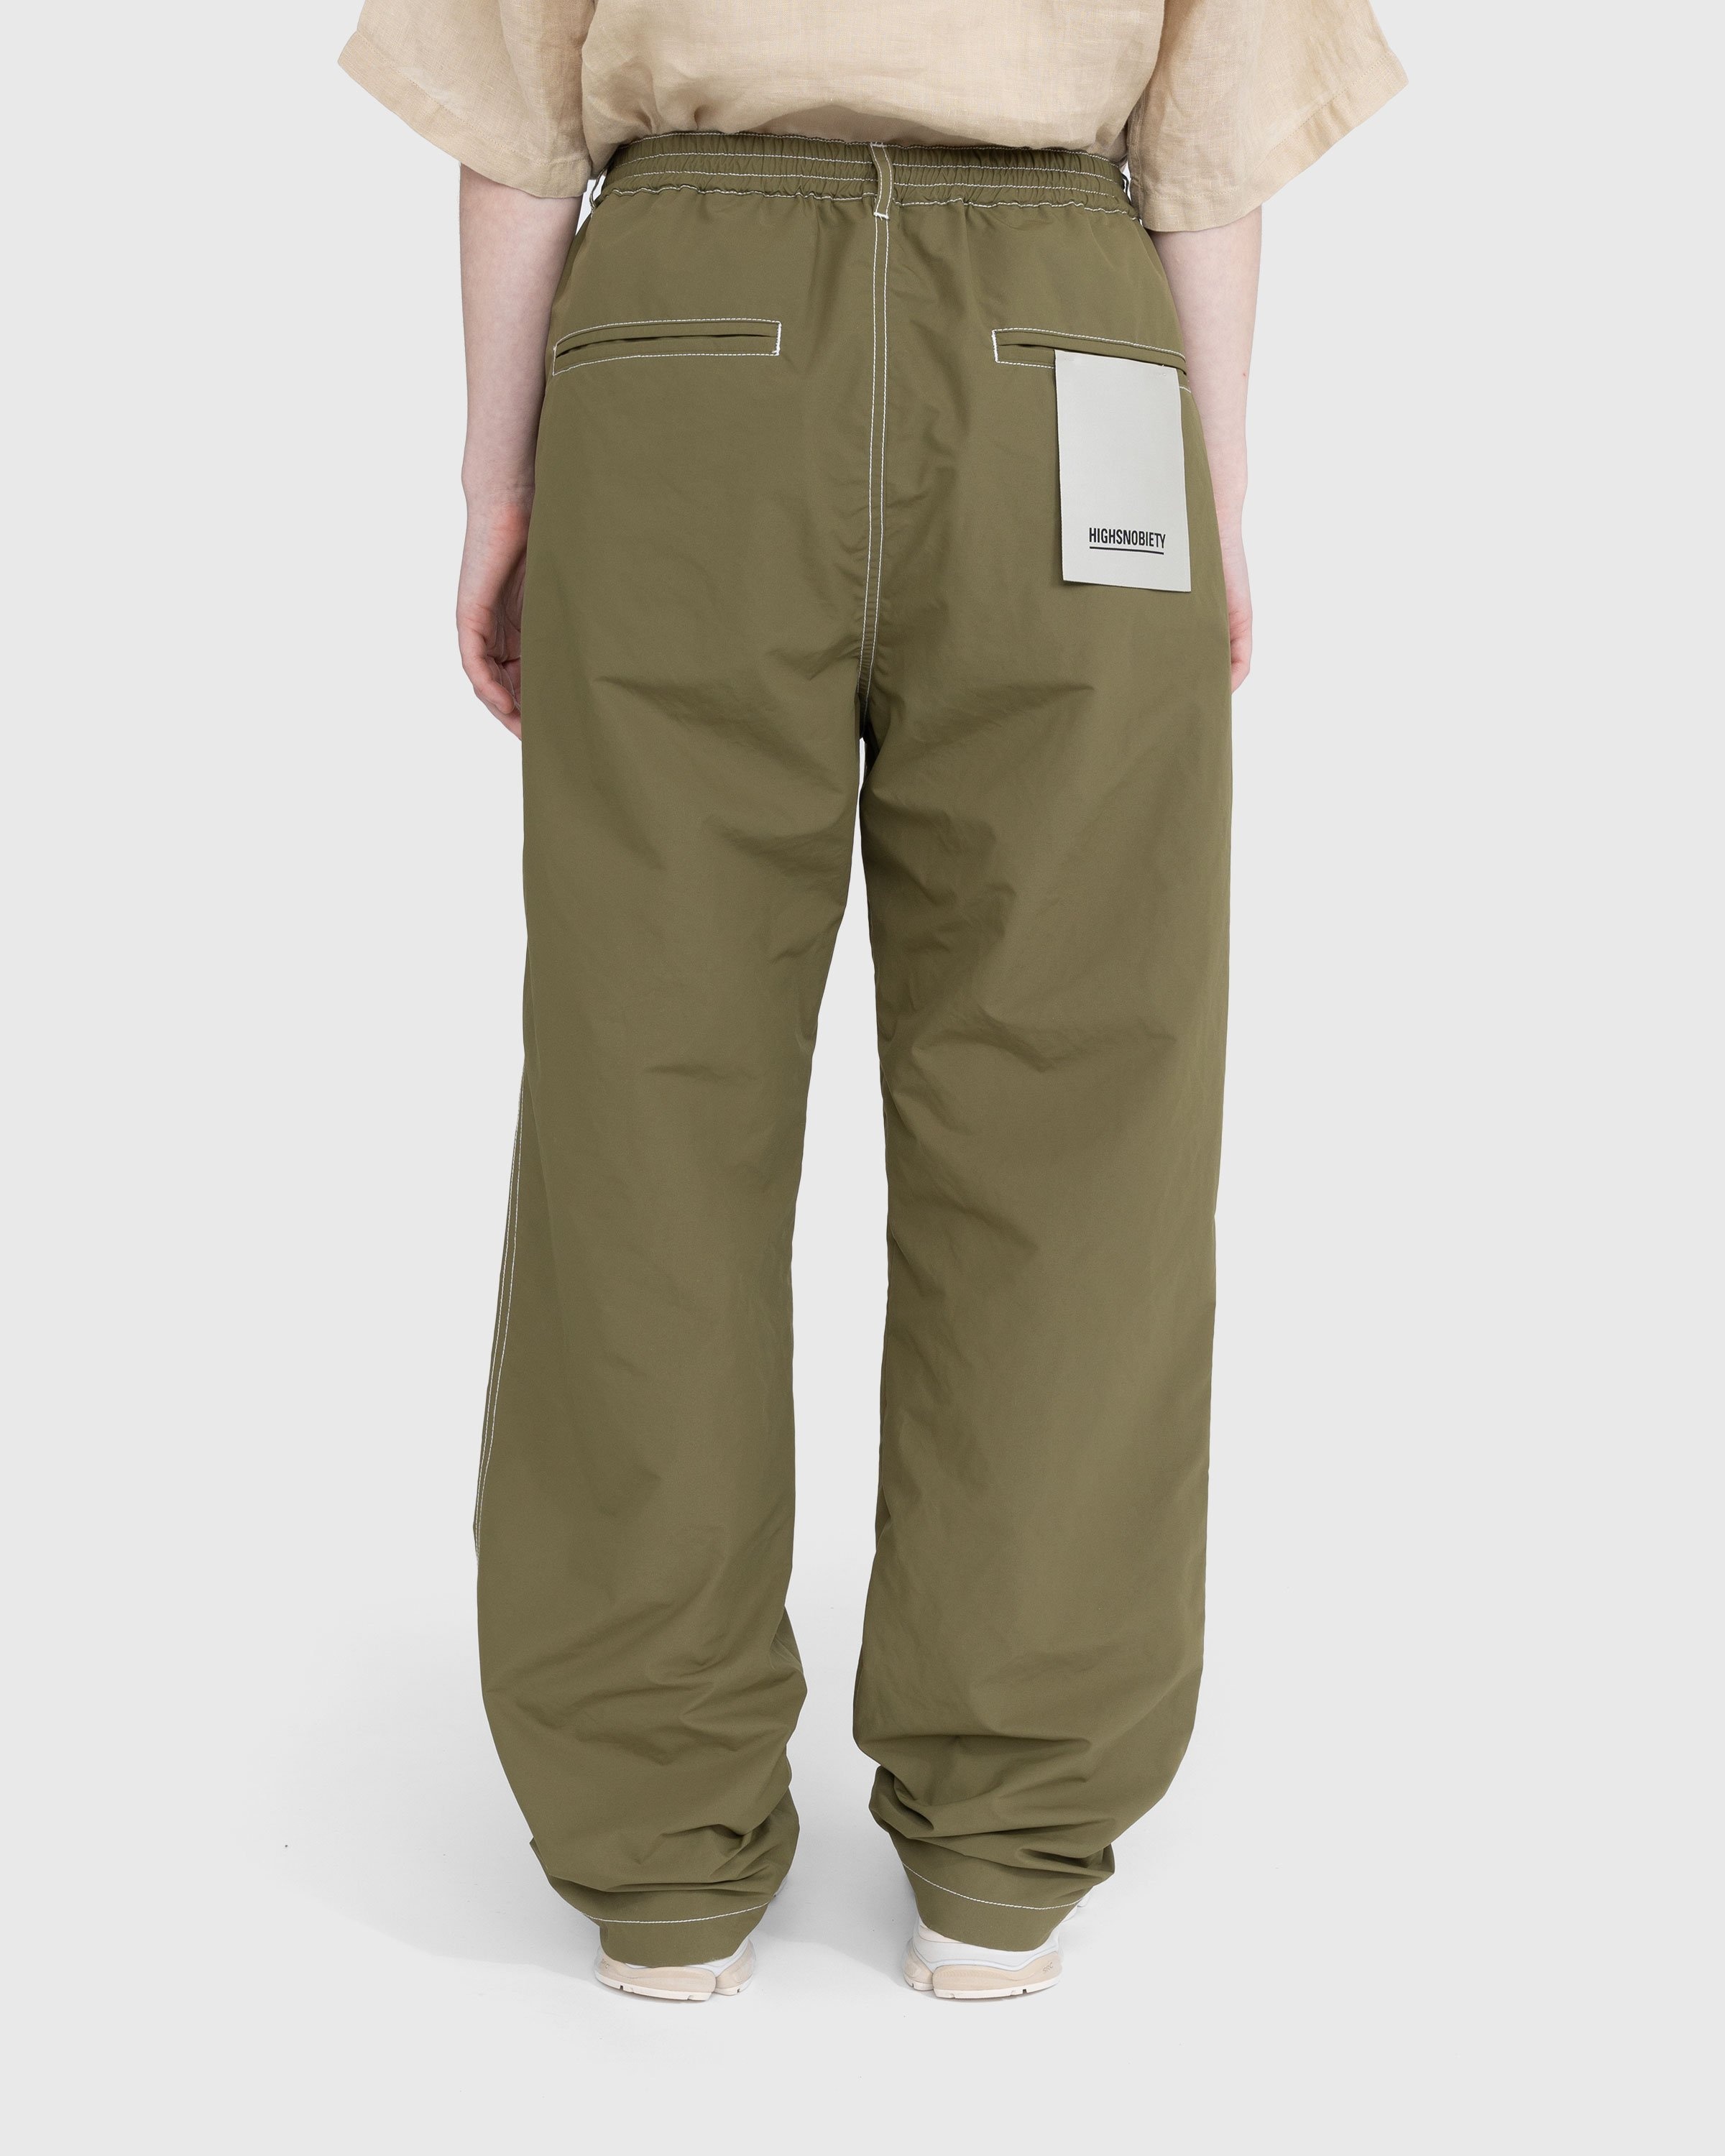 Highsnobiety – Contrast Stitch Pants Khaki - Pants - Green - Image 5